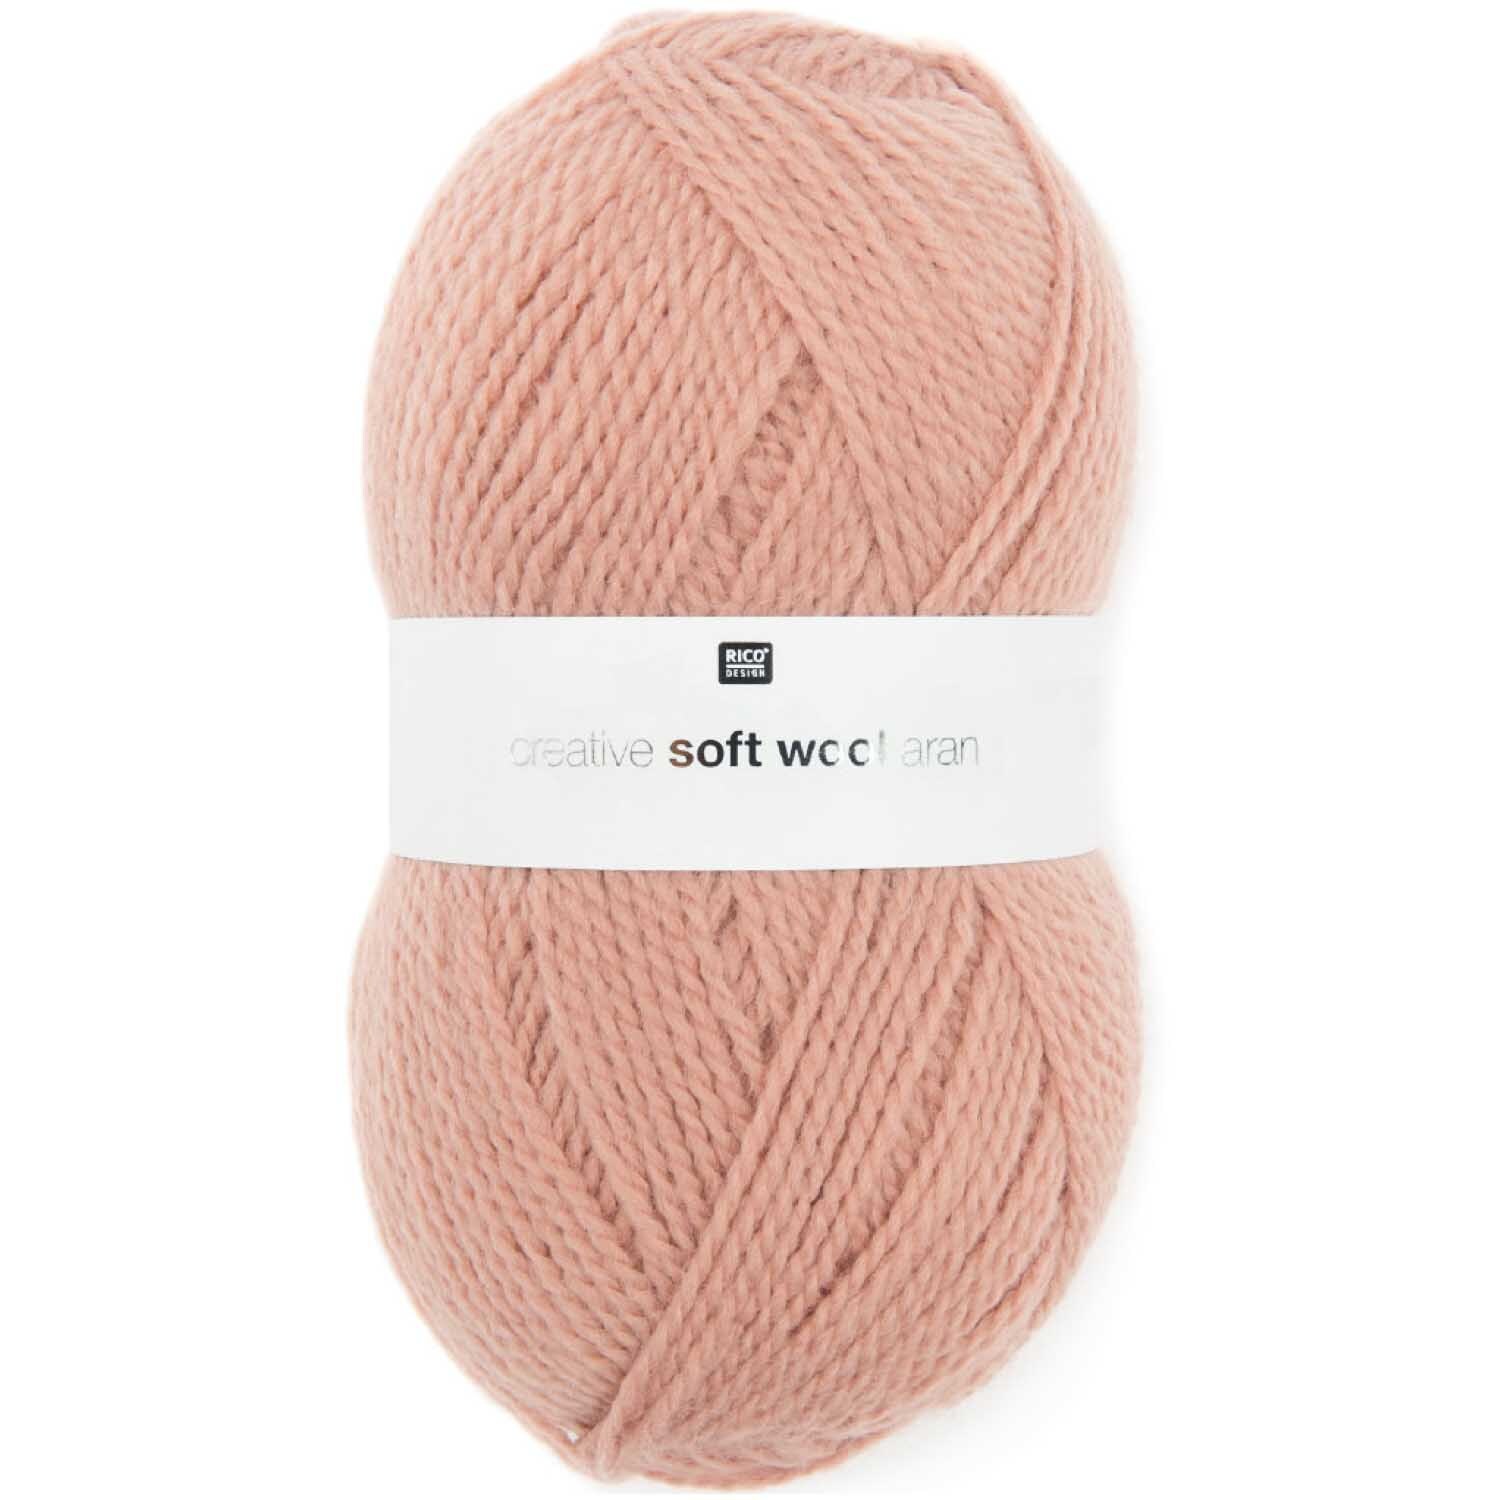 Creative Soft Wool aran